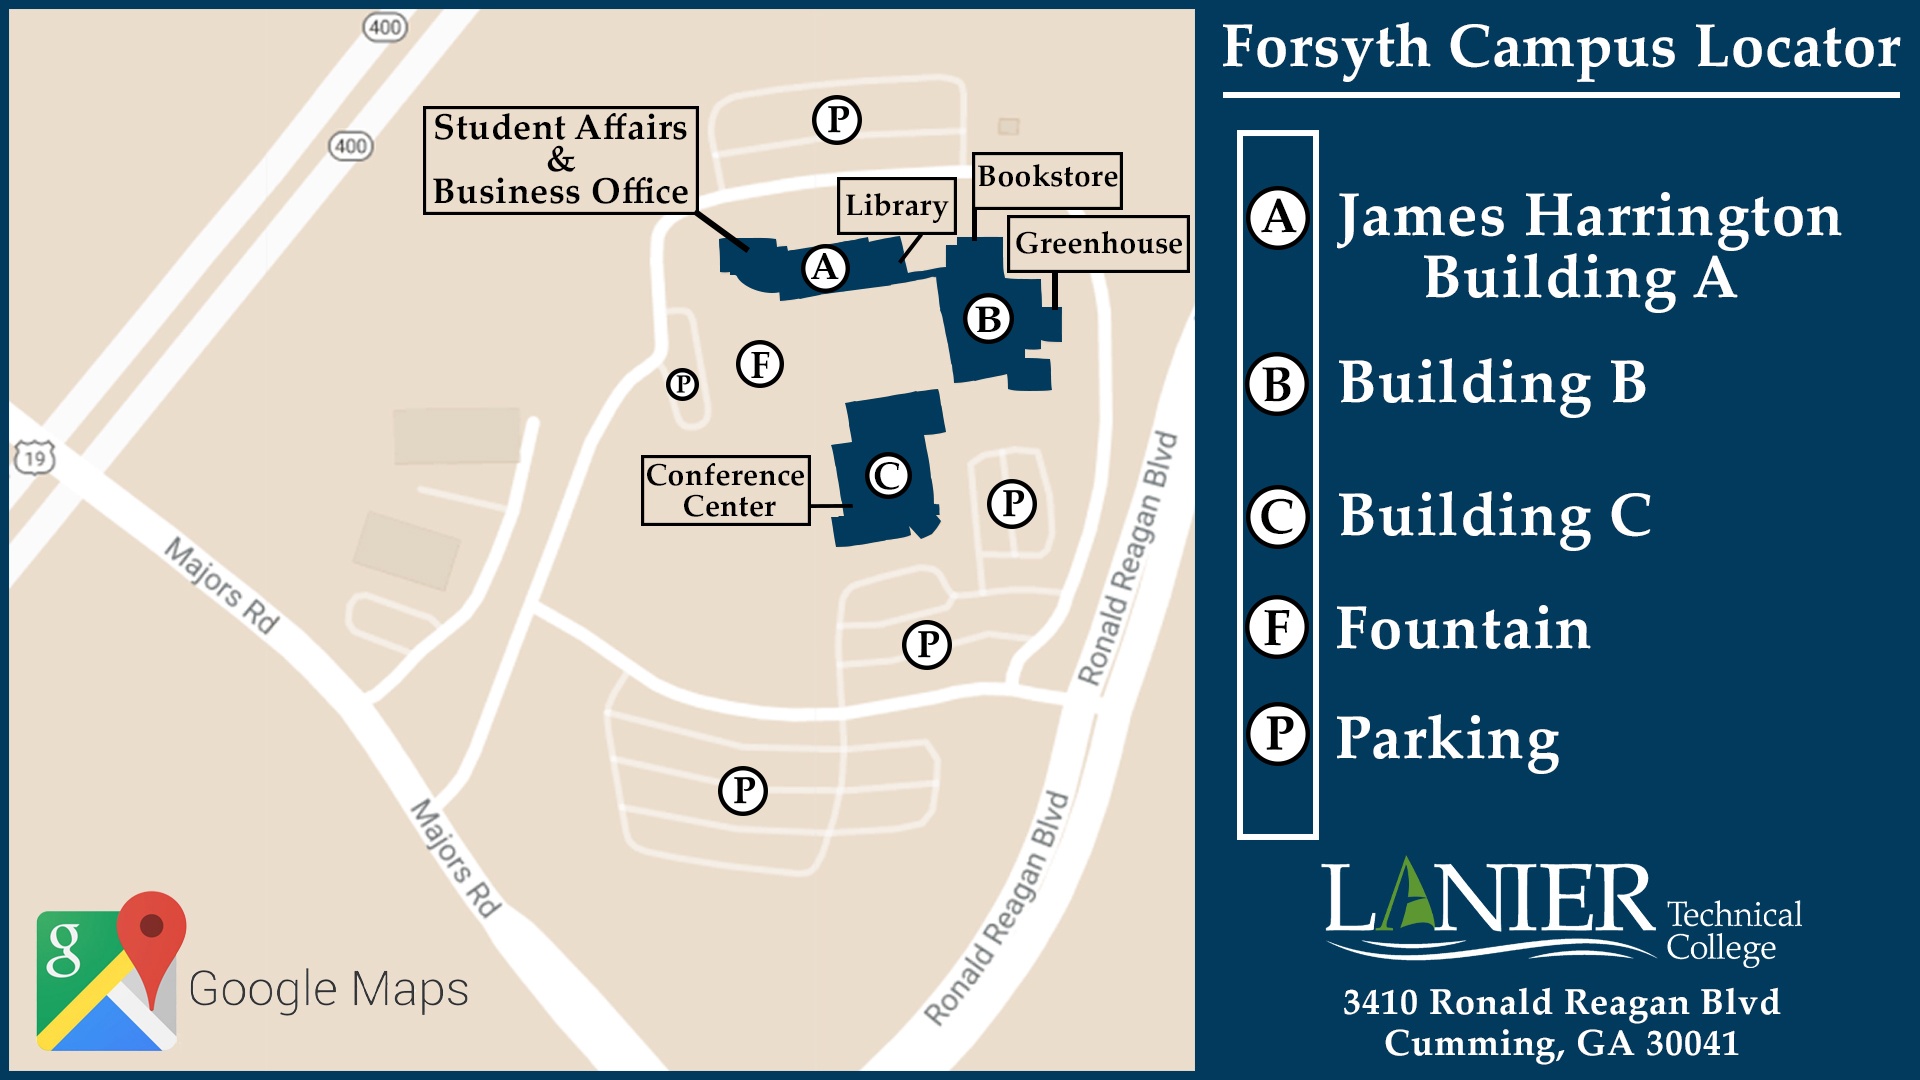 Lanier Technical College Campus Locations - Lanier Technical College